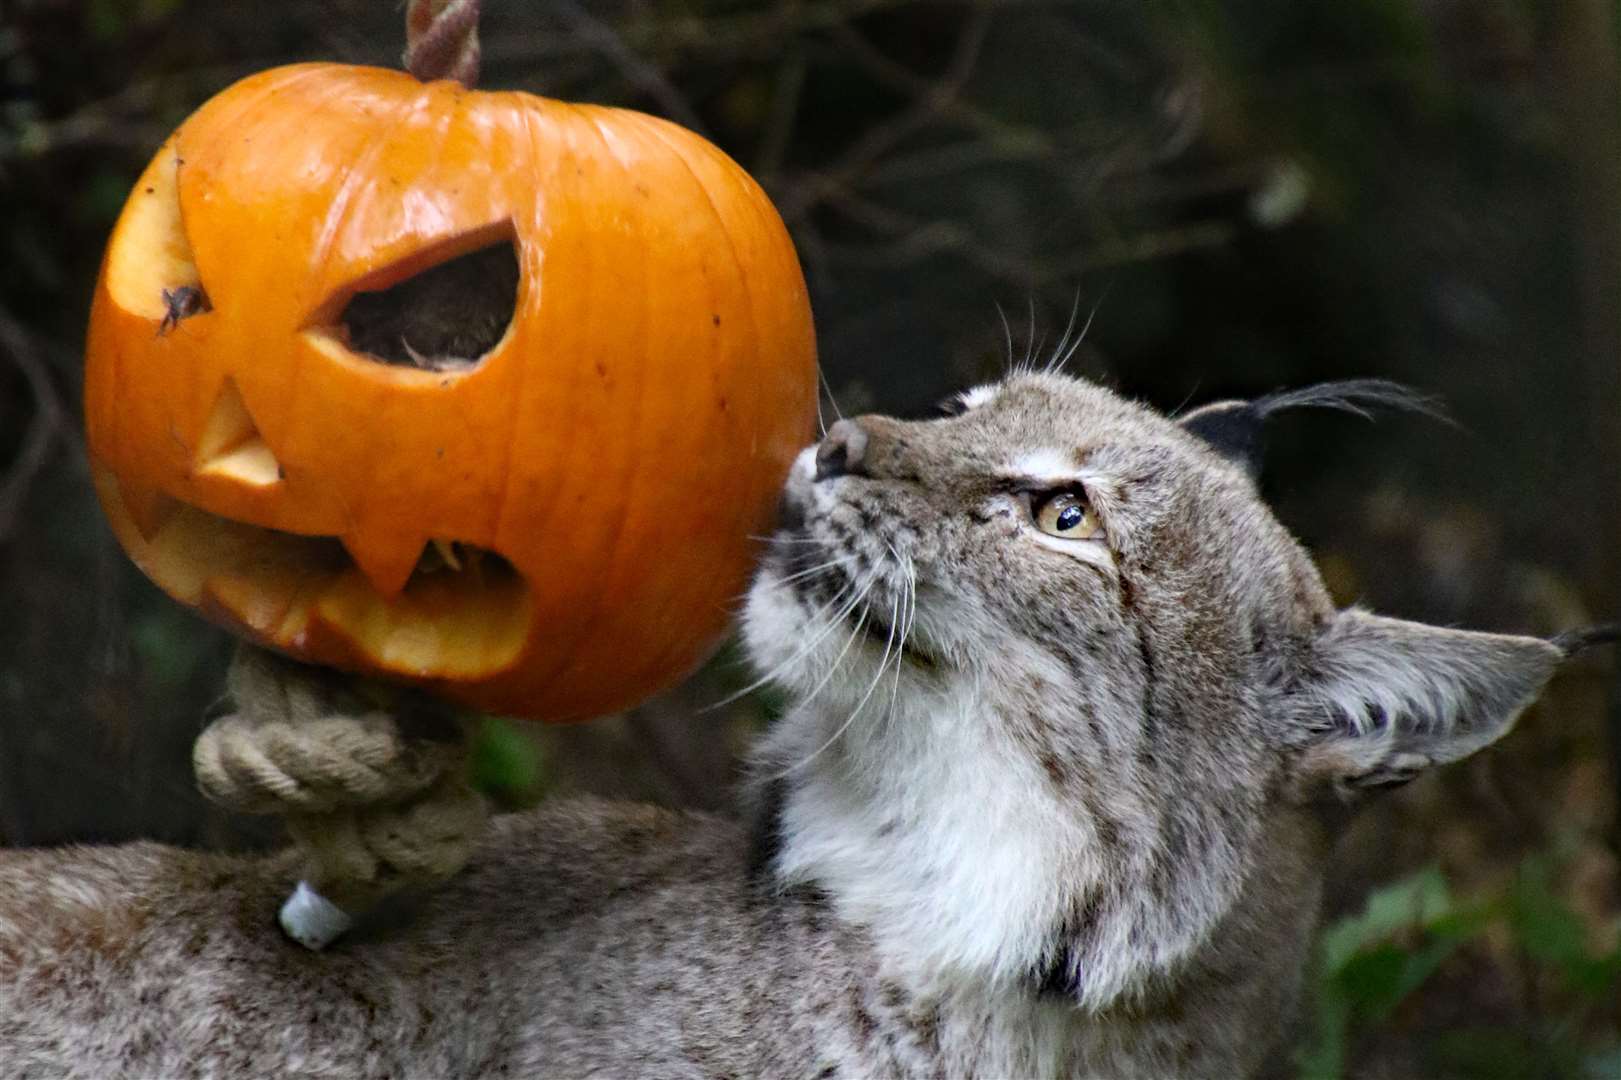 A lynx at Wildwood checks out a pumpkin treat